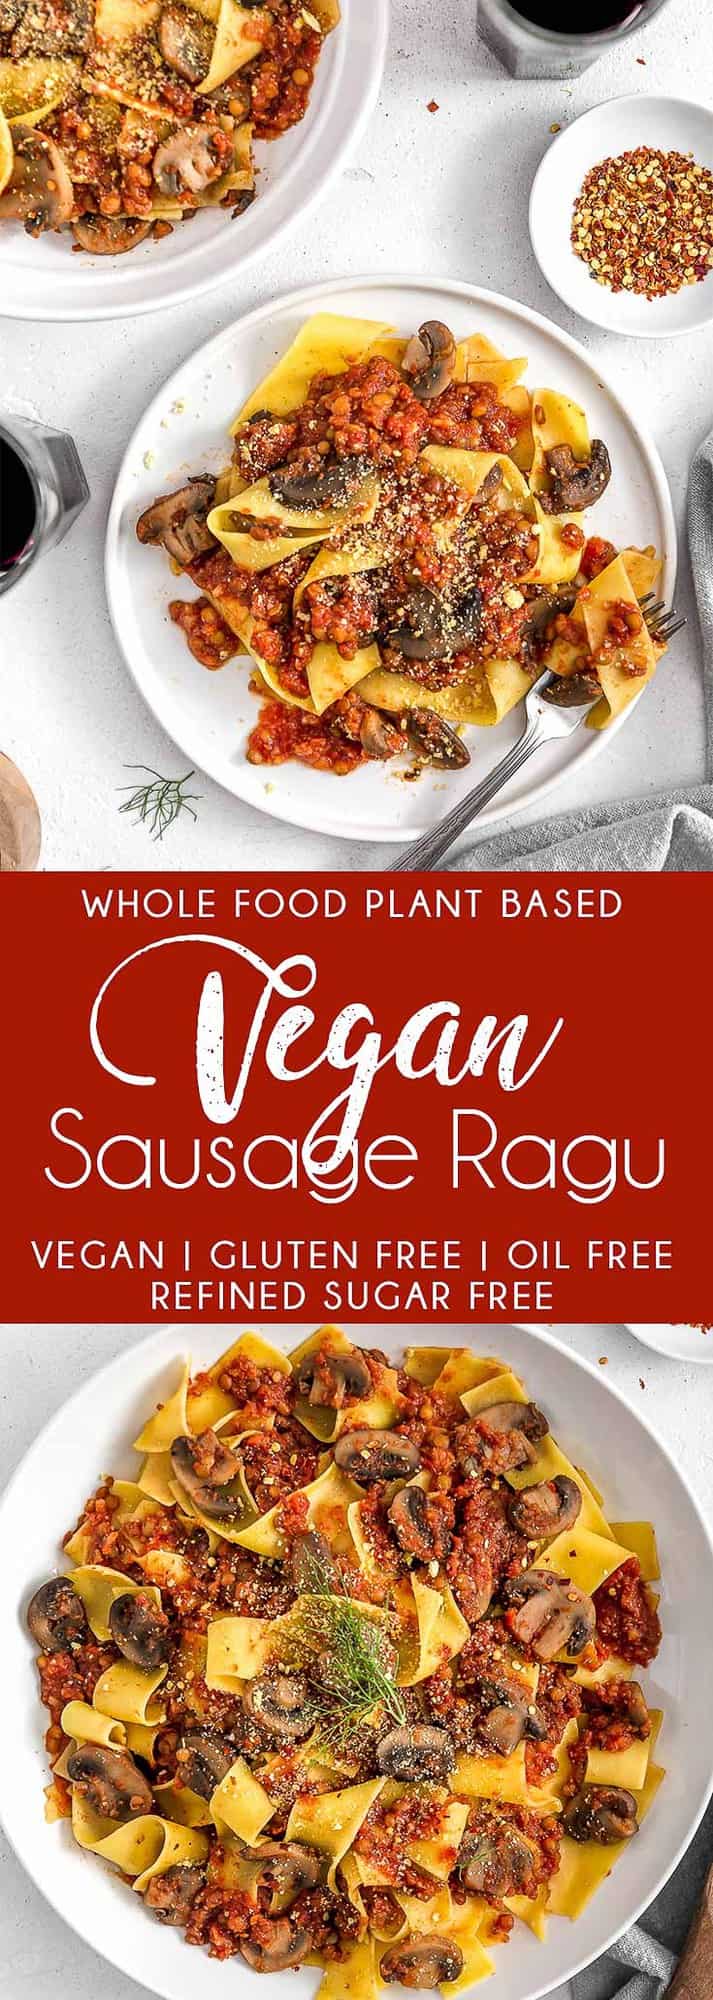 Vegan Sausage Ragu, vegan ragu, vegan sausage, plant based ragu, plant based, vegan, vegetarian, whole food plant based, gluten free, recipe, wfpb, healthy, healthy vegan, oil free, no refined sugar, no oil, refined sugar free, dairy free, dinner party, entertaining, dinner, pasta, pasta sauce, sauce, tomato sauce